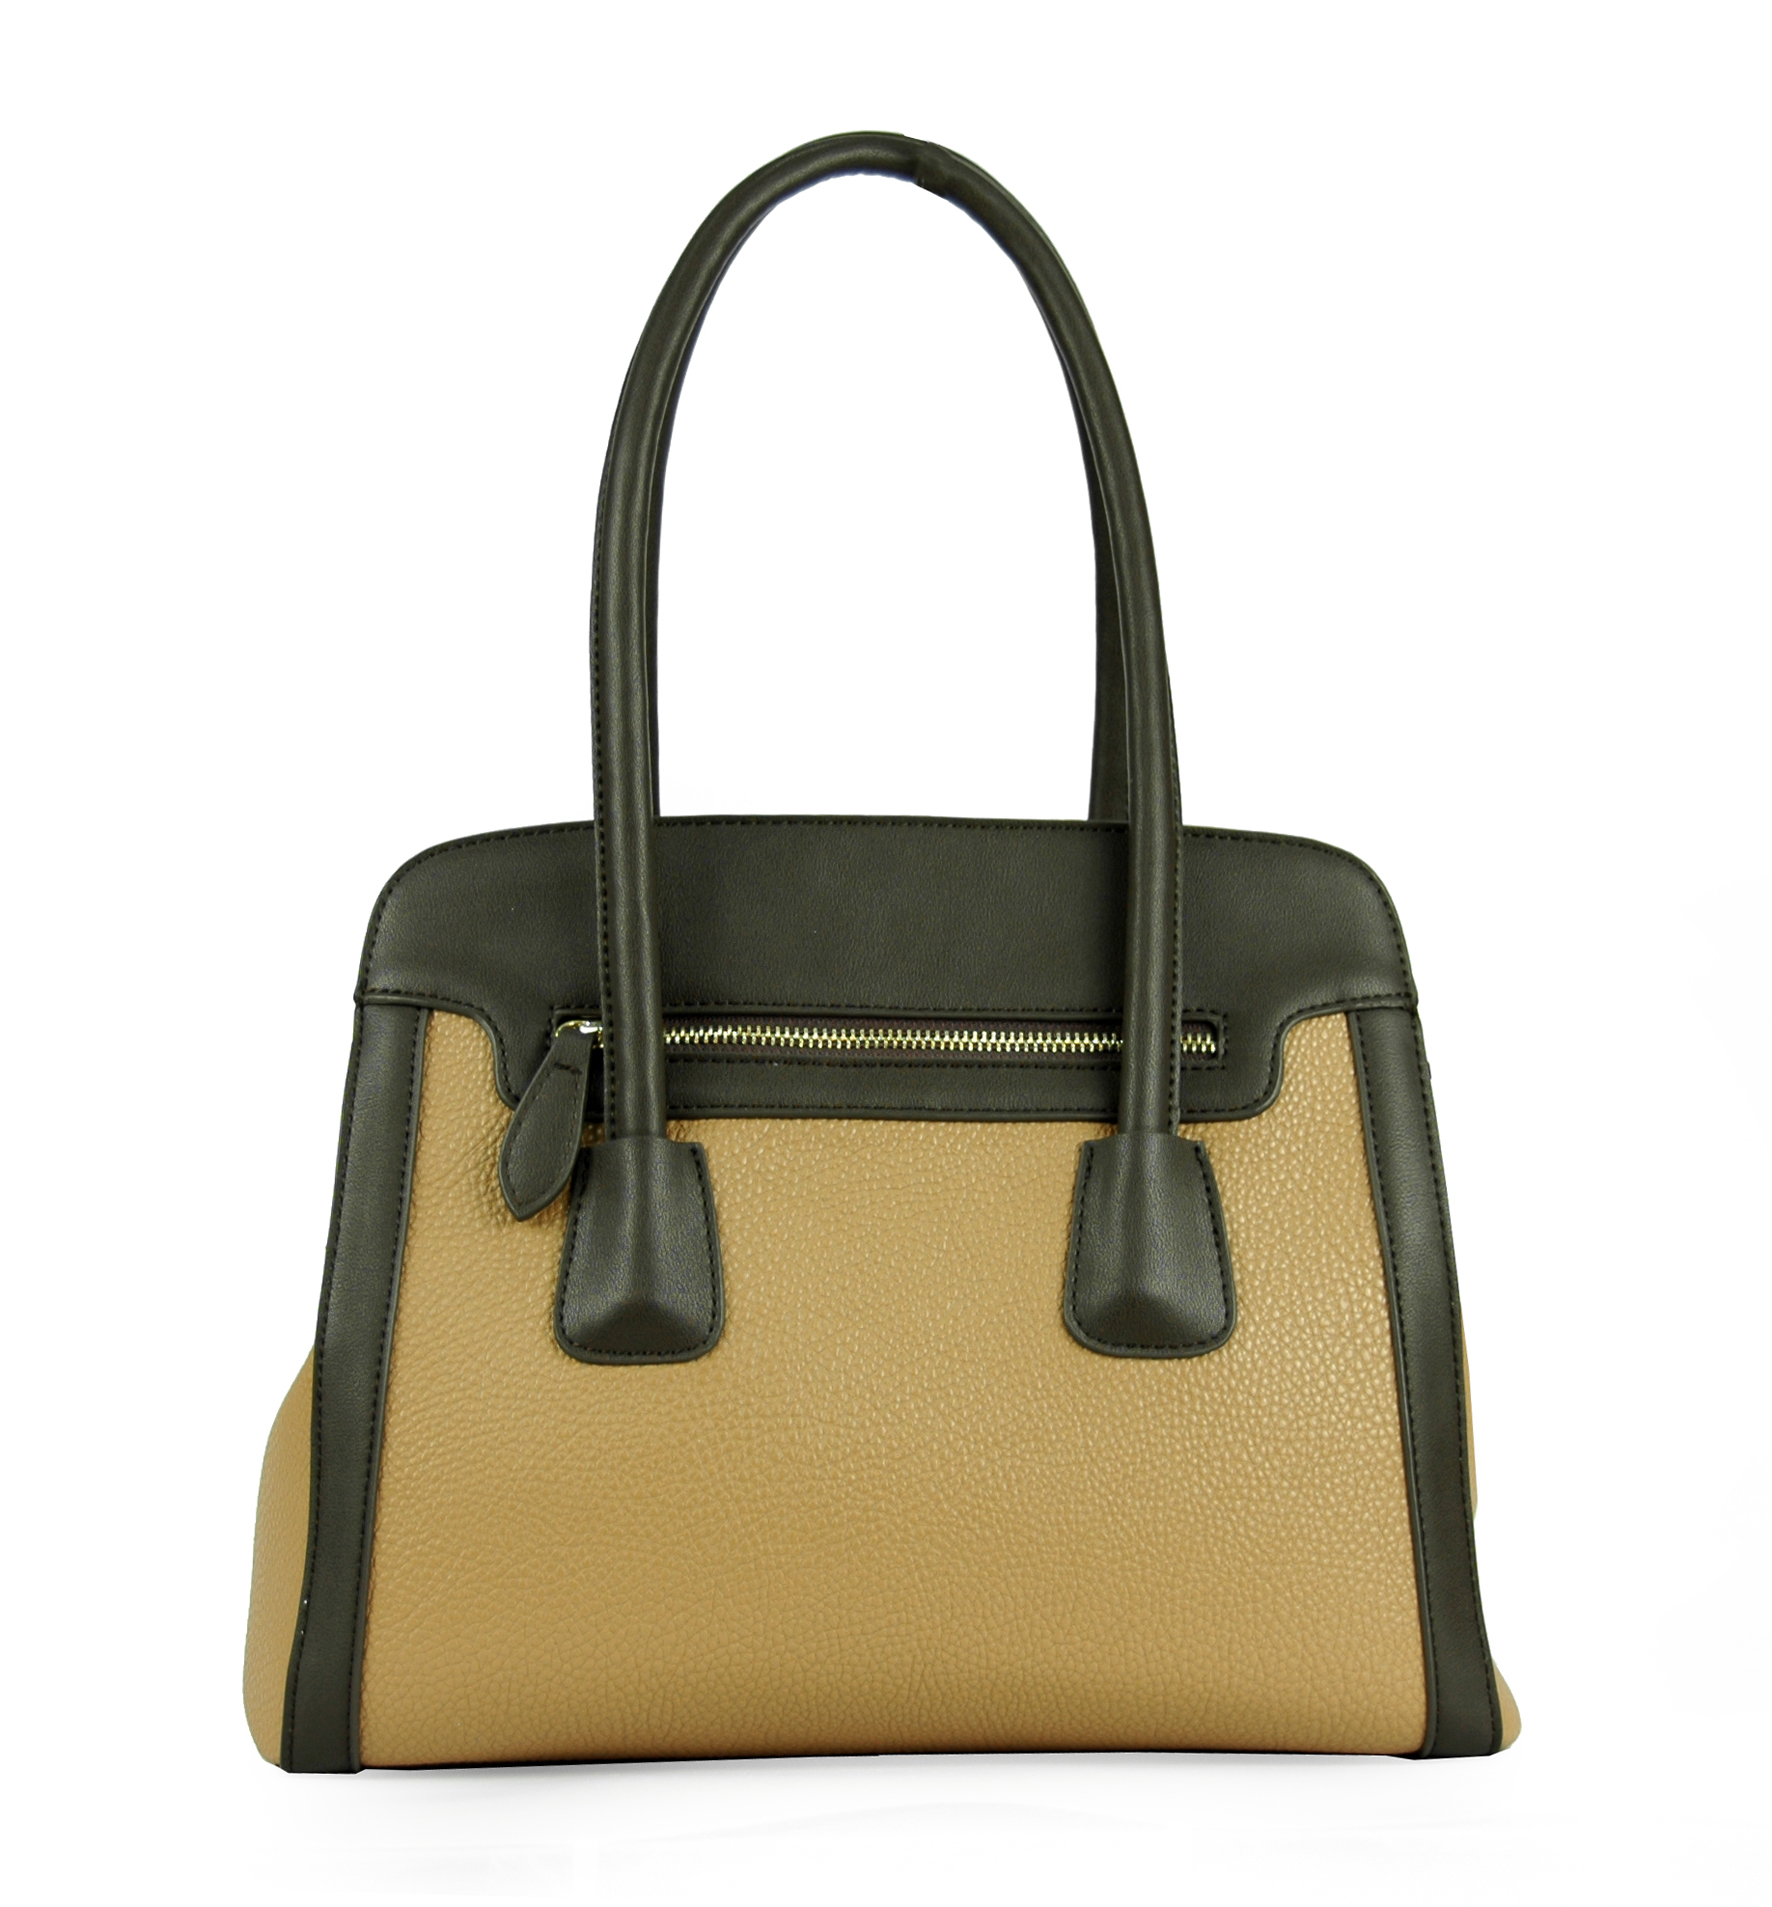 artificial leather PU lady fashion tote handbag